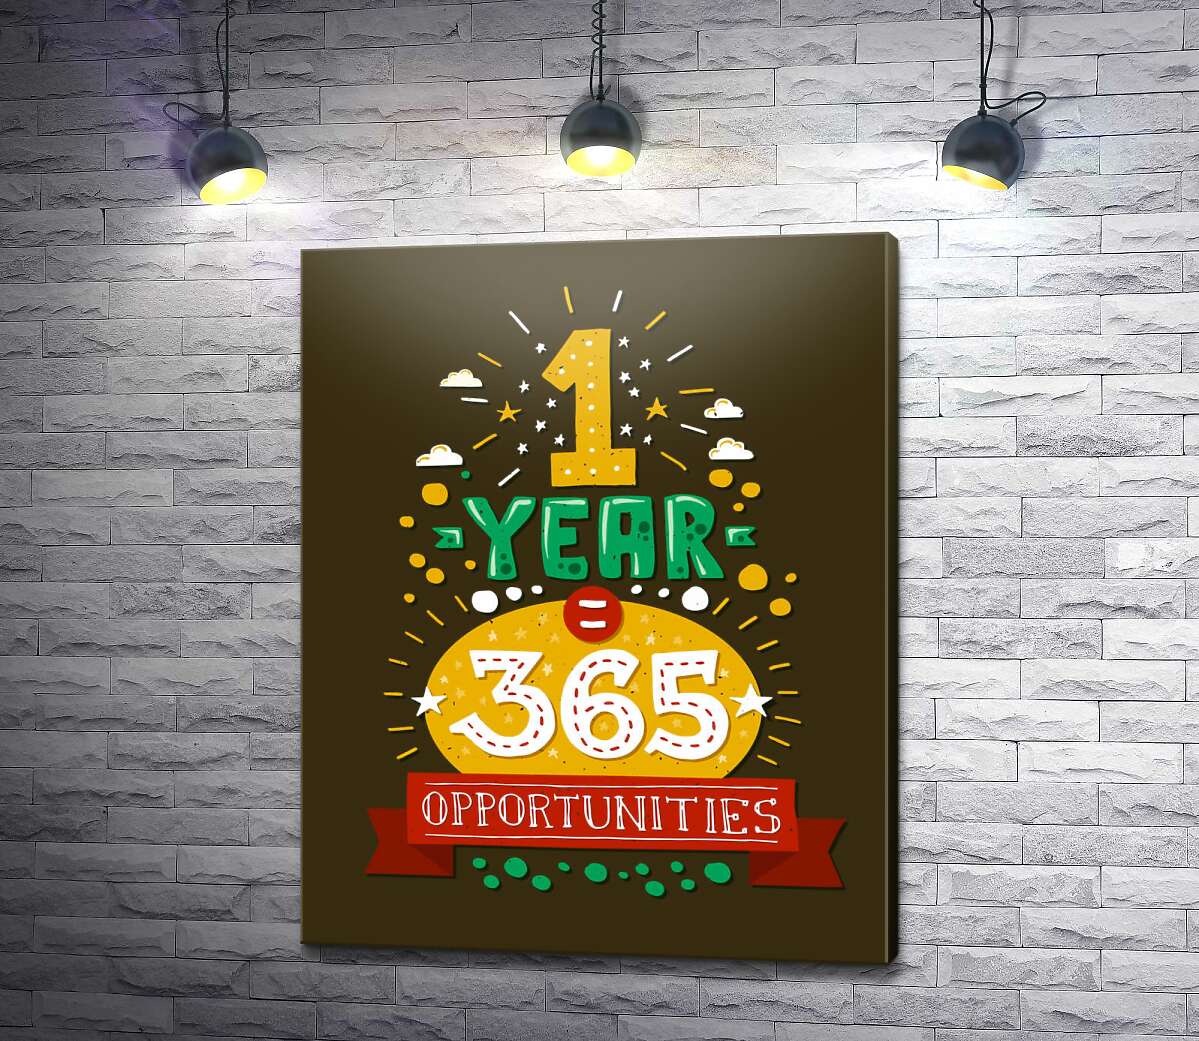 картина Мотивационная надпись: "1 year = 365 opportunities"